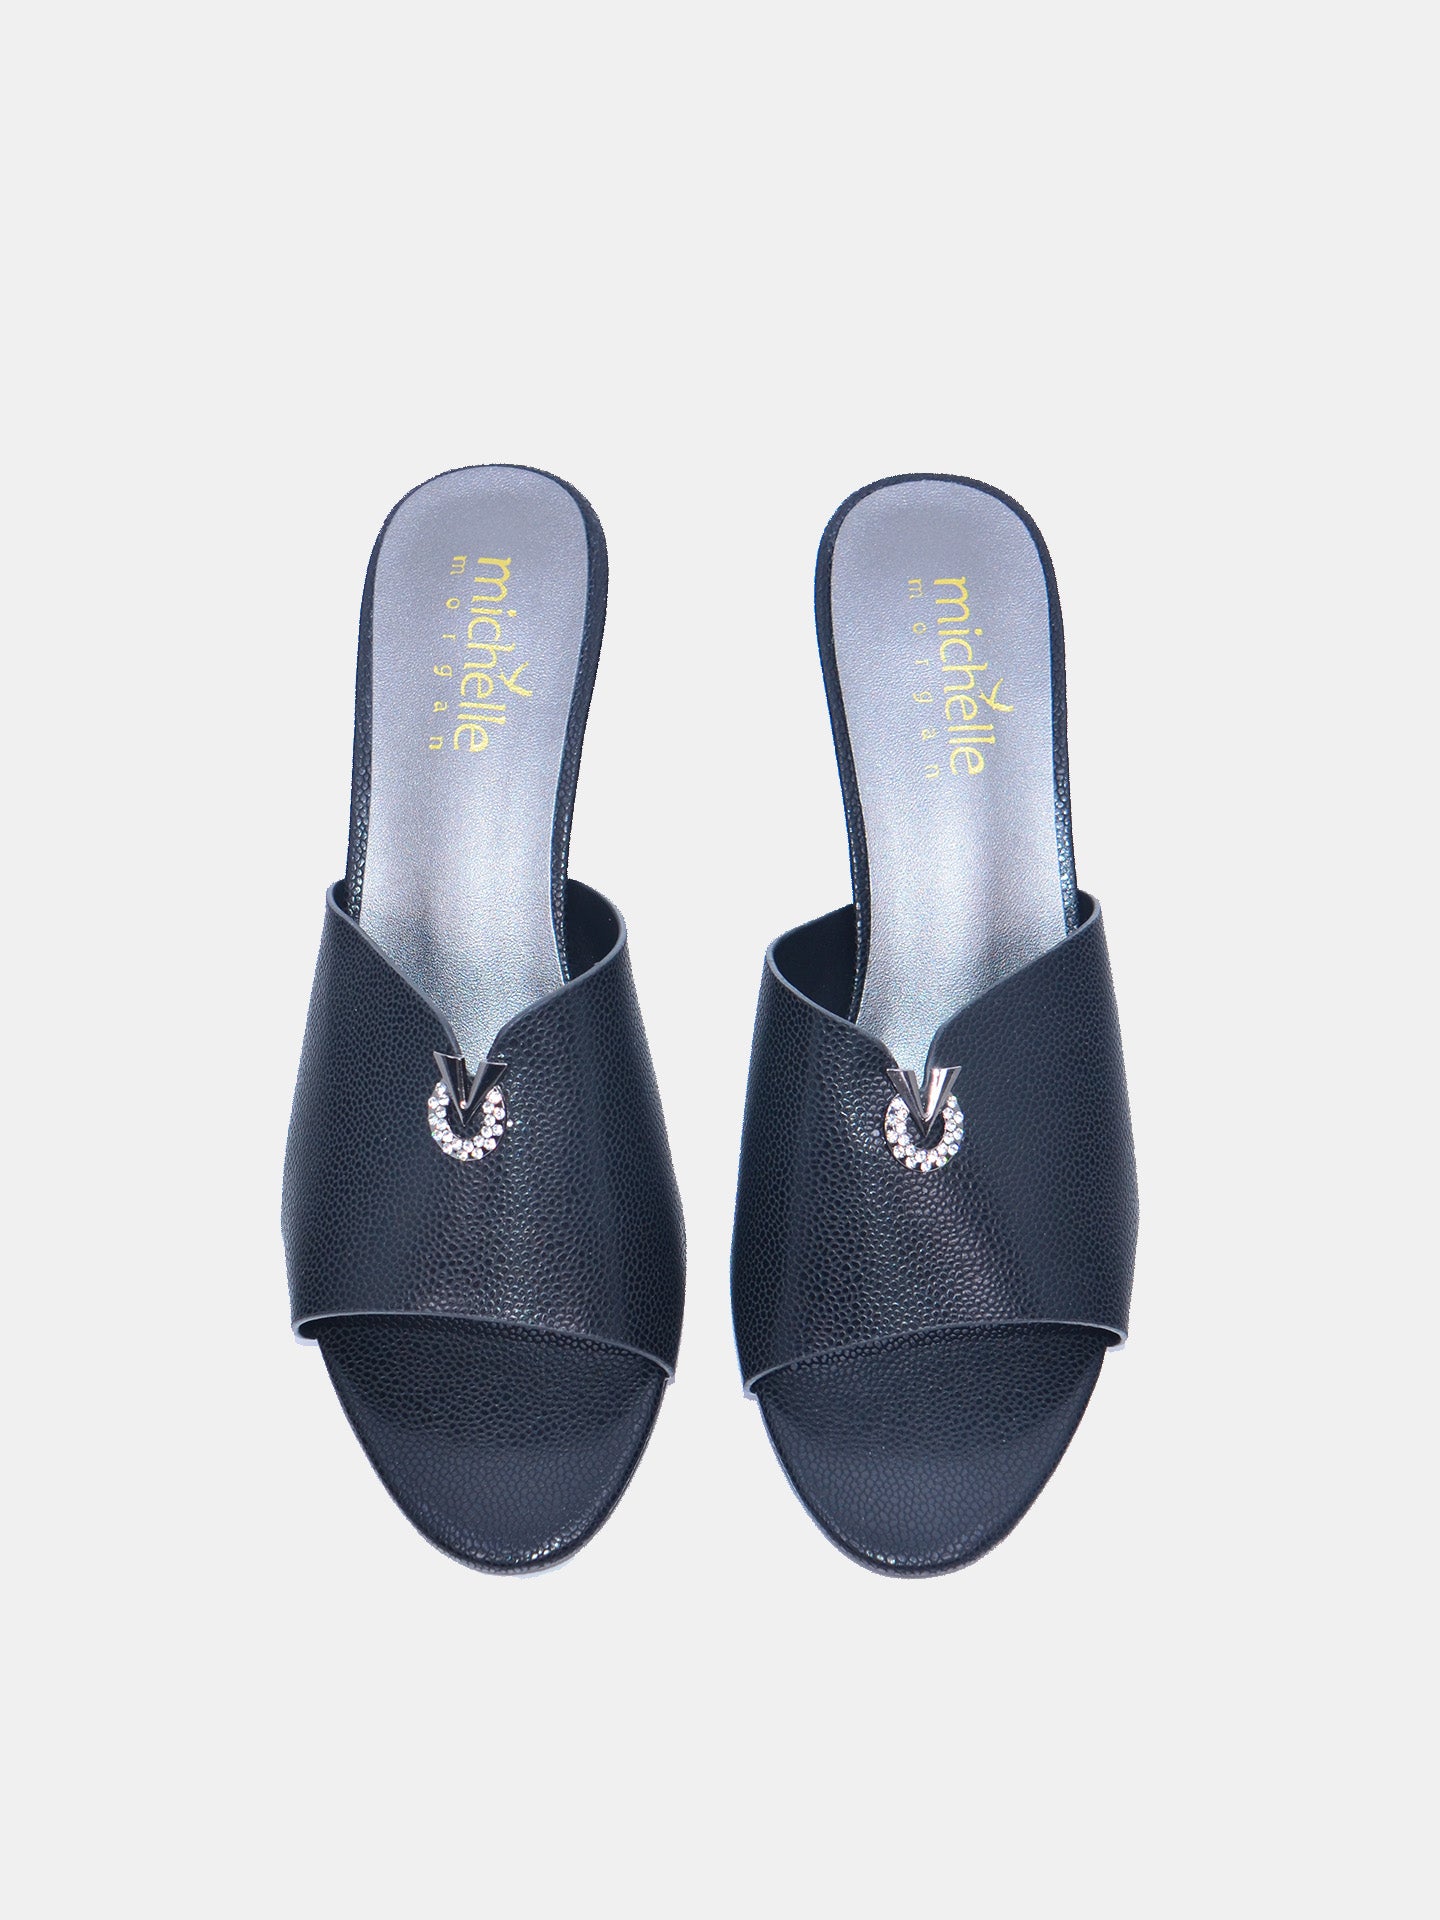 Michelle Morgan 213RC001 Women's Heeled Sandals #color_Black